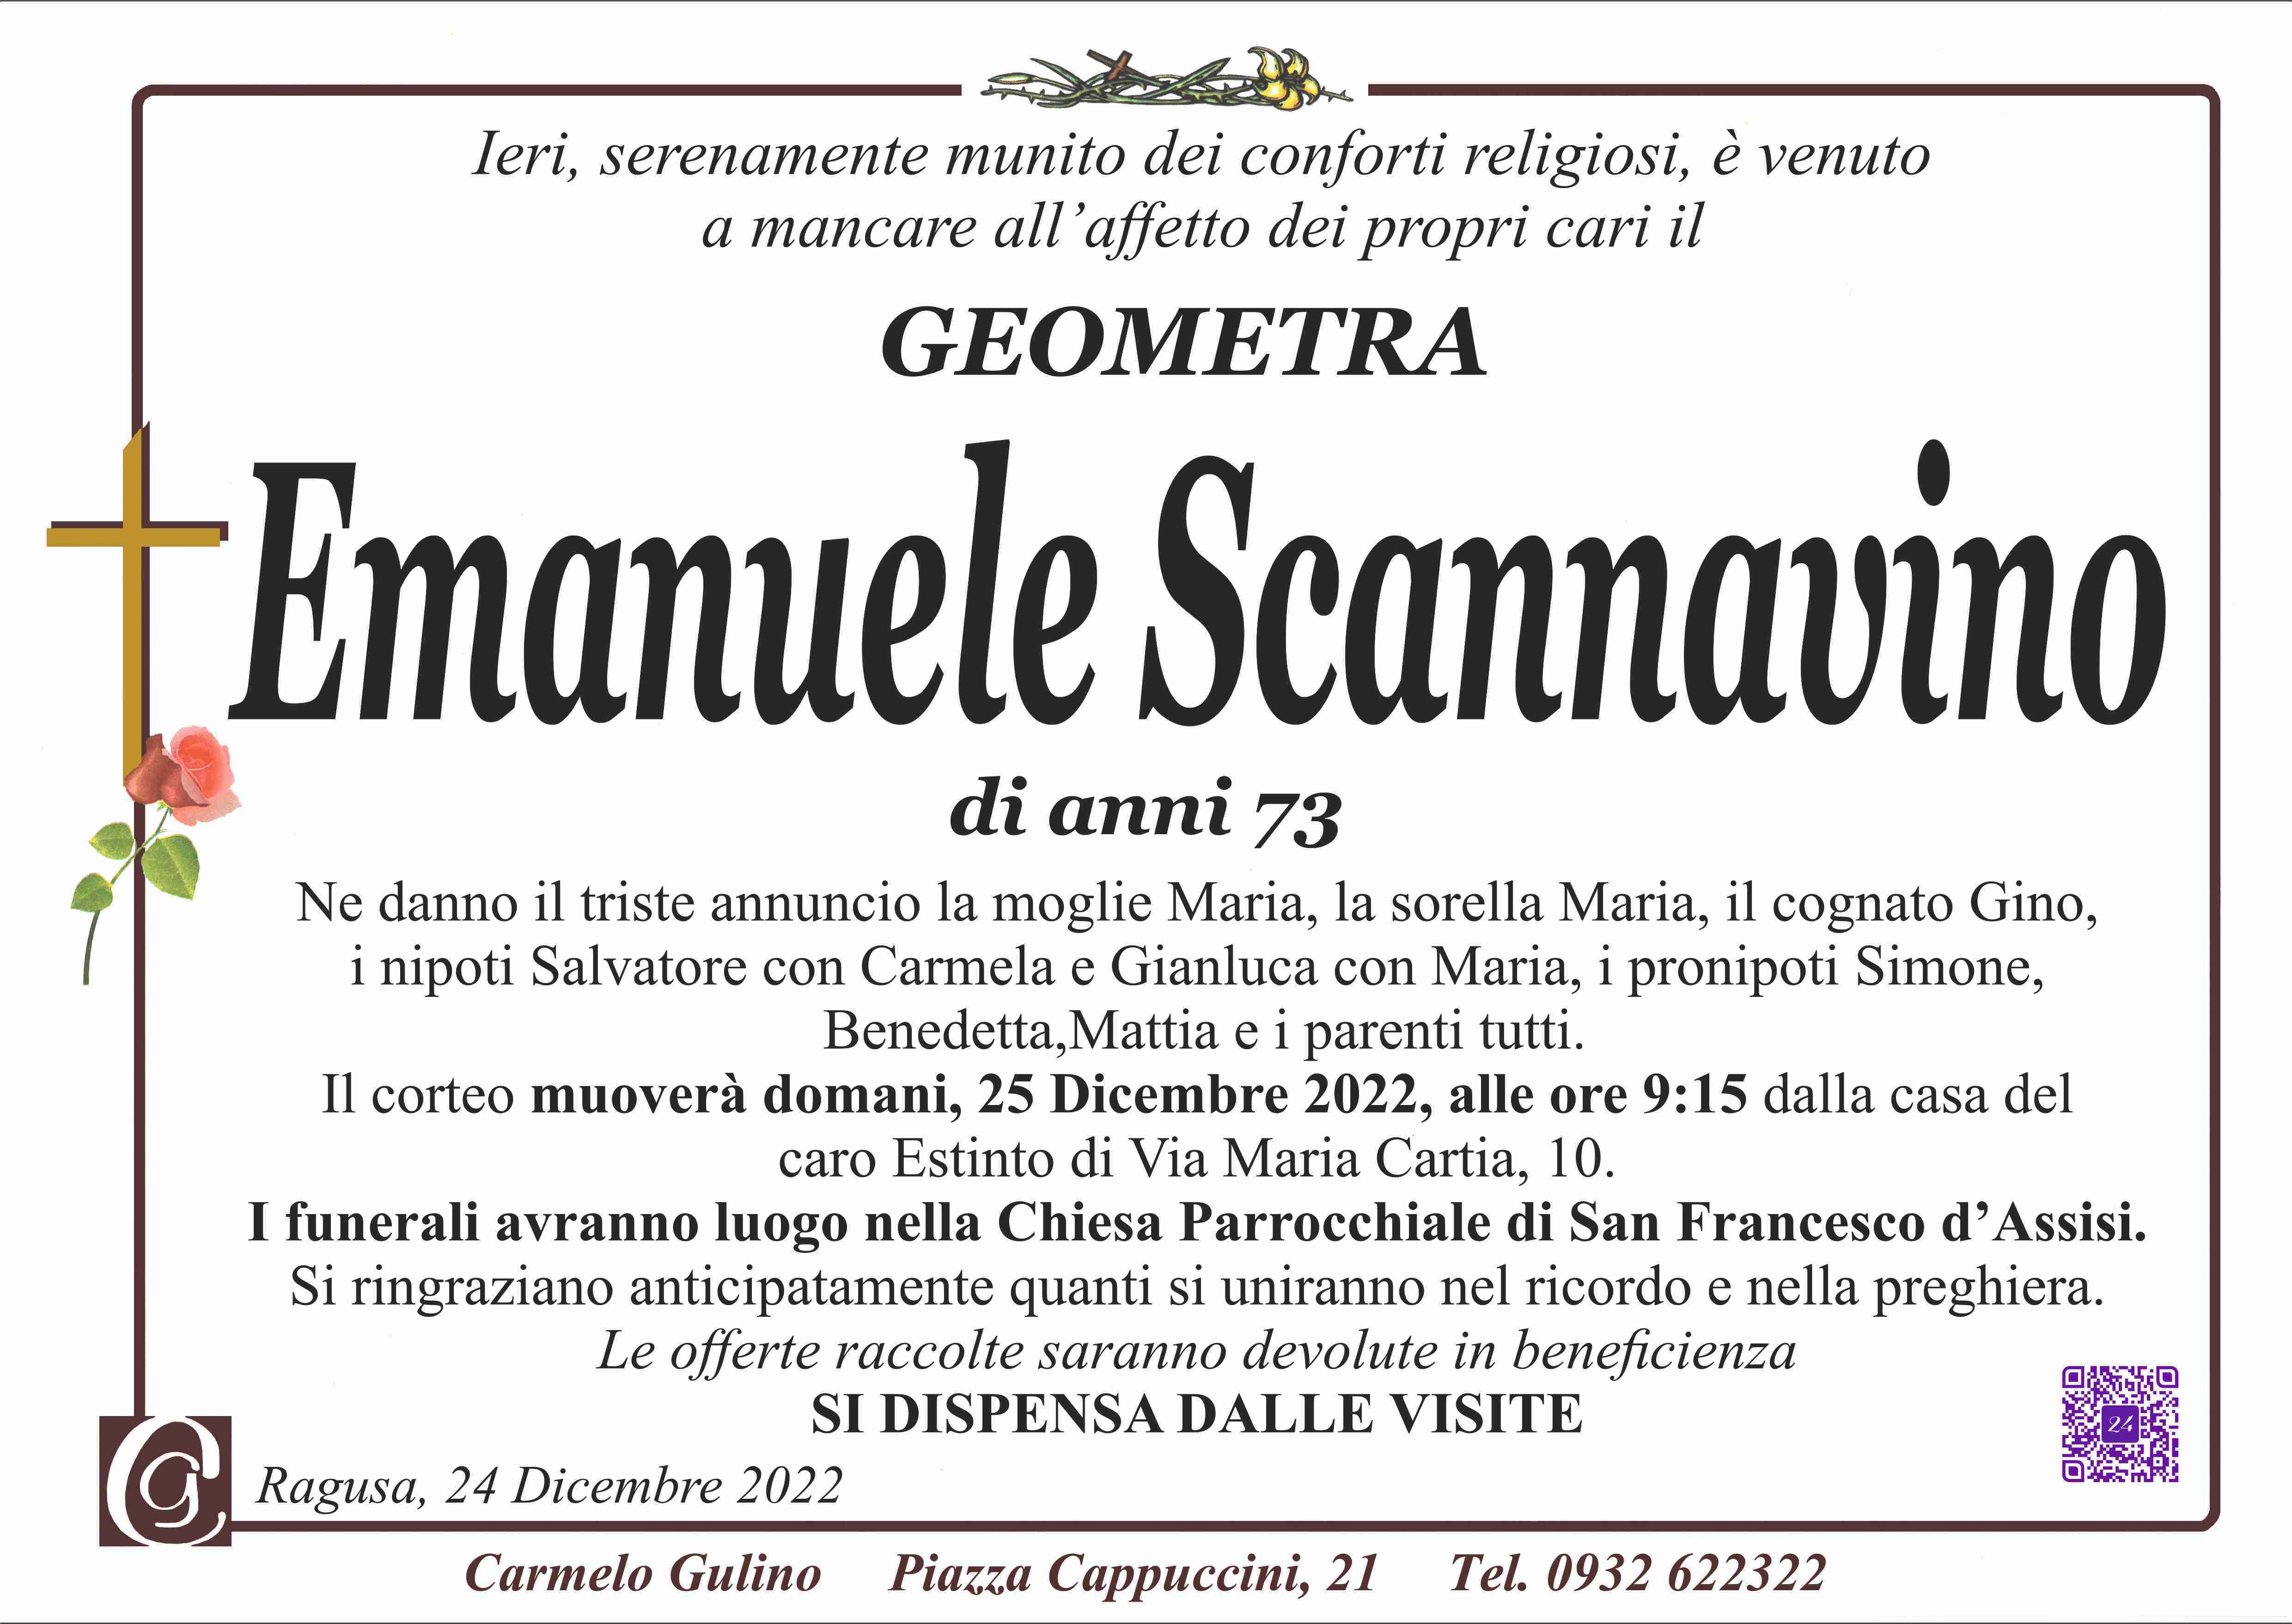 Emanuele Scannavino